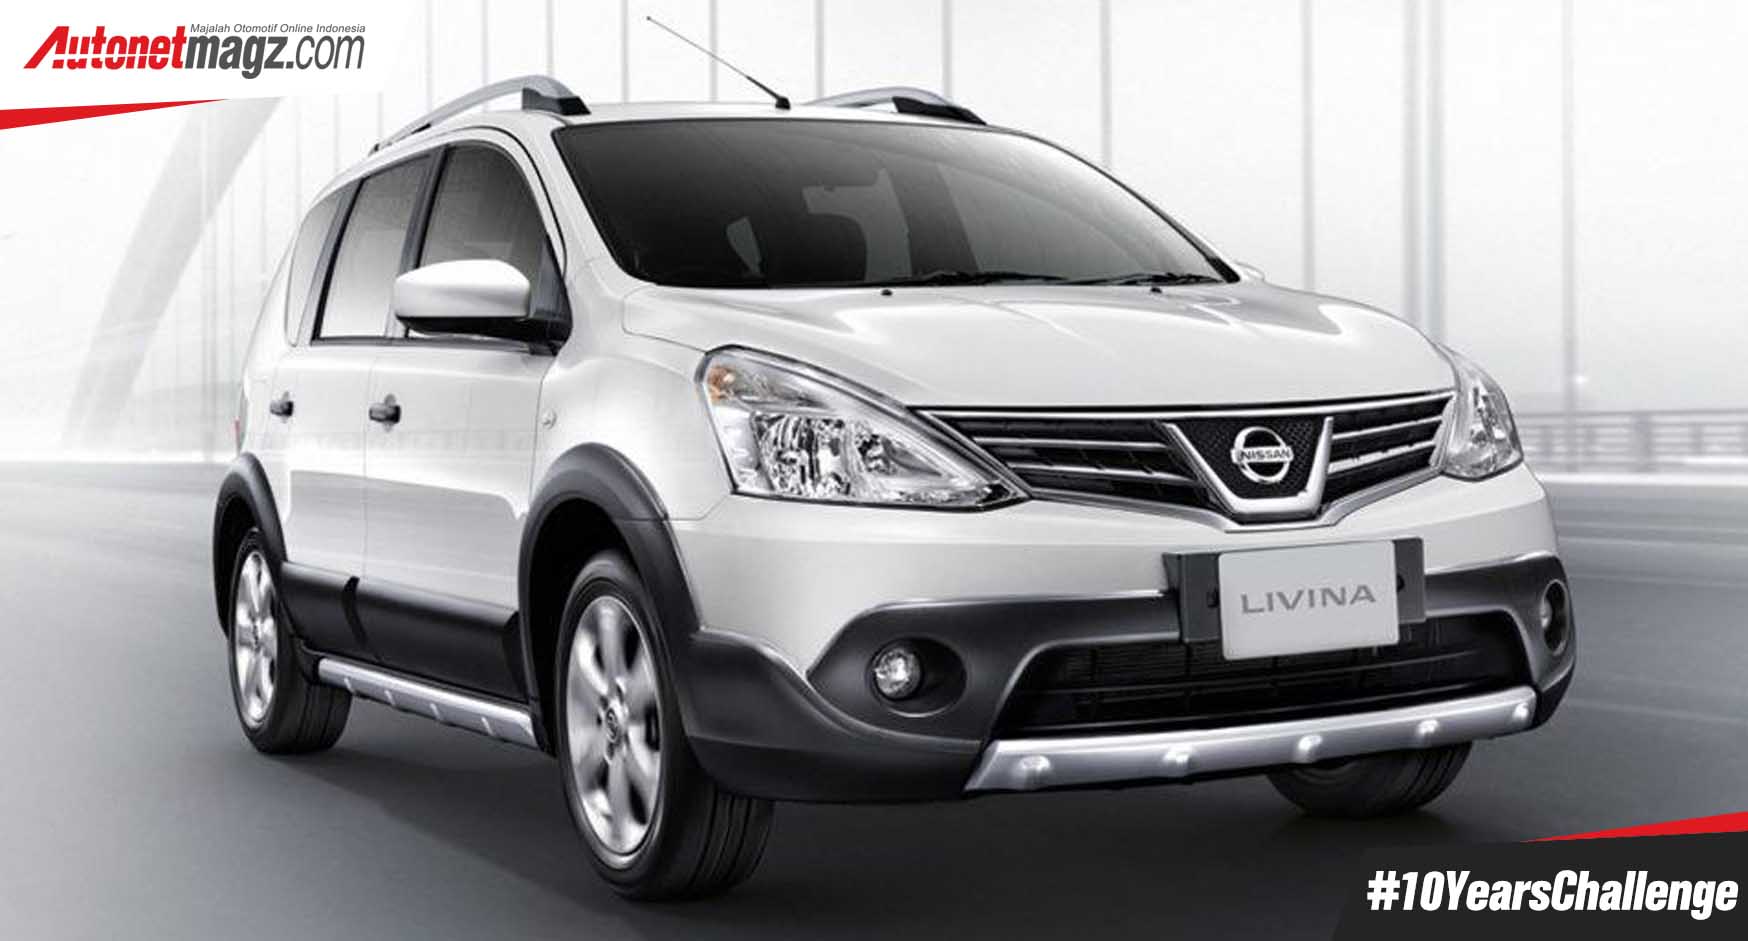 Berita, #10YearsChallenge Nissan Livina: #10YearsChallenge : 7 Mobil Berusia 10 Tahun Yang Tinggal Kenangan